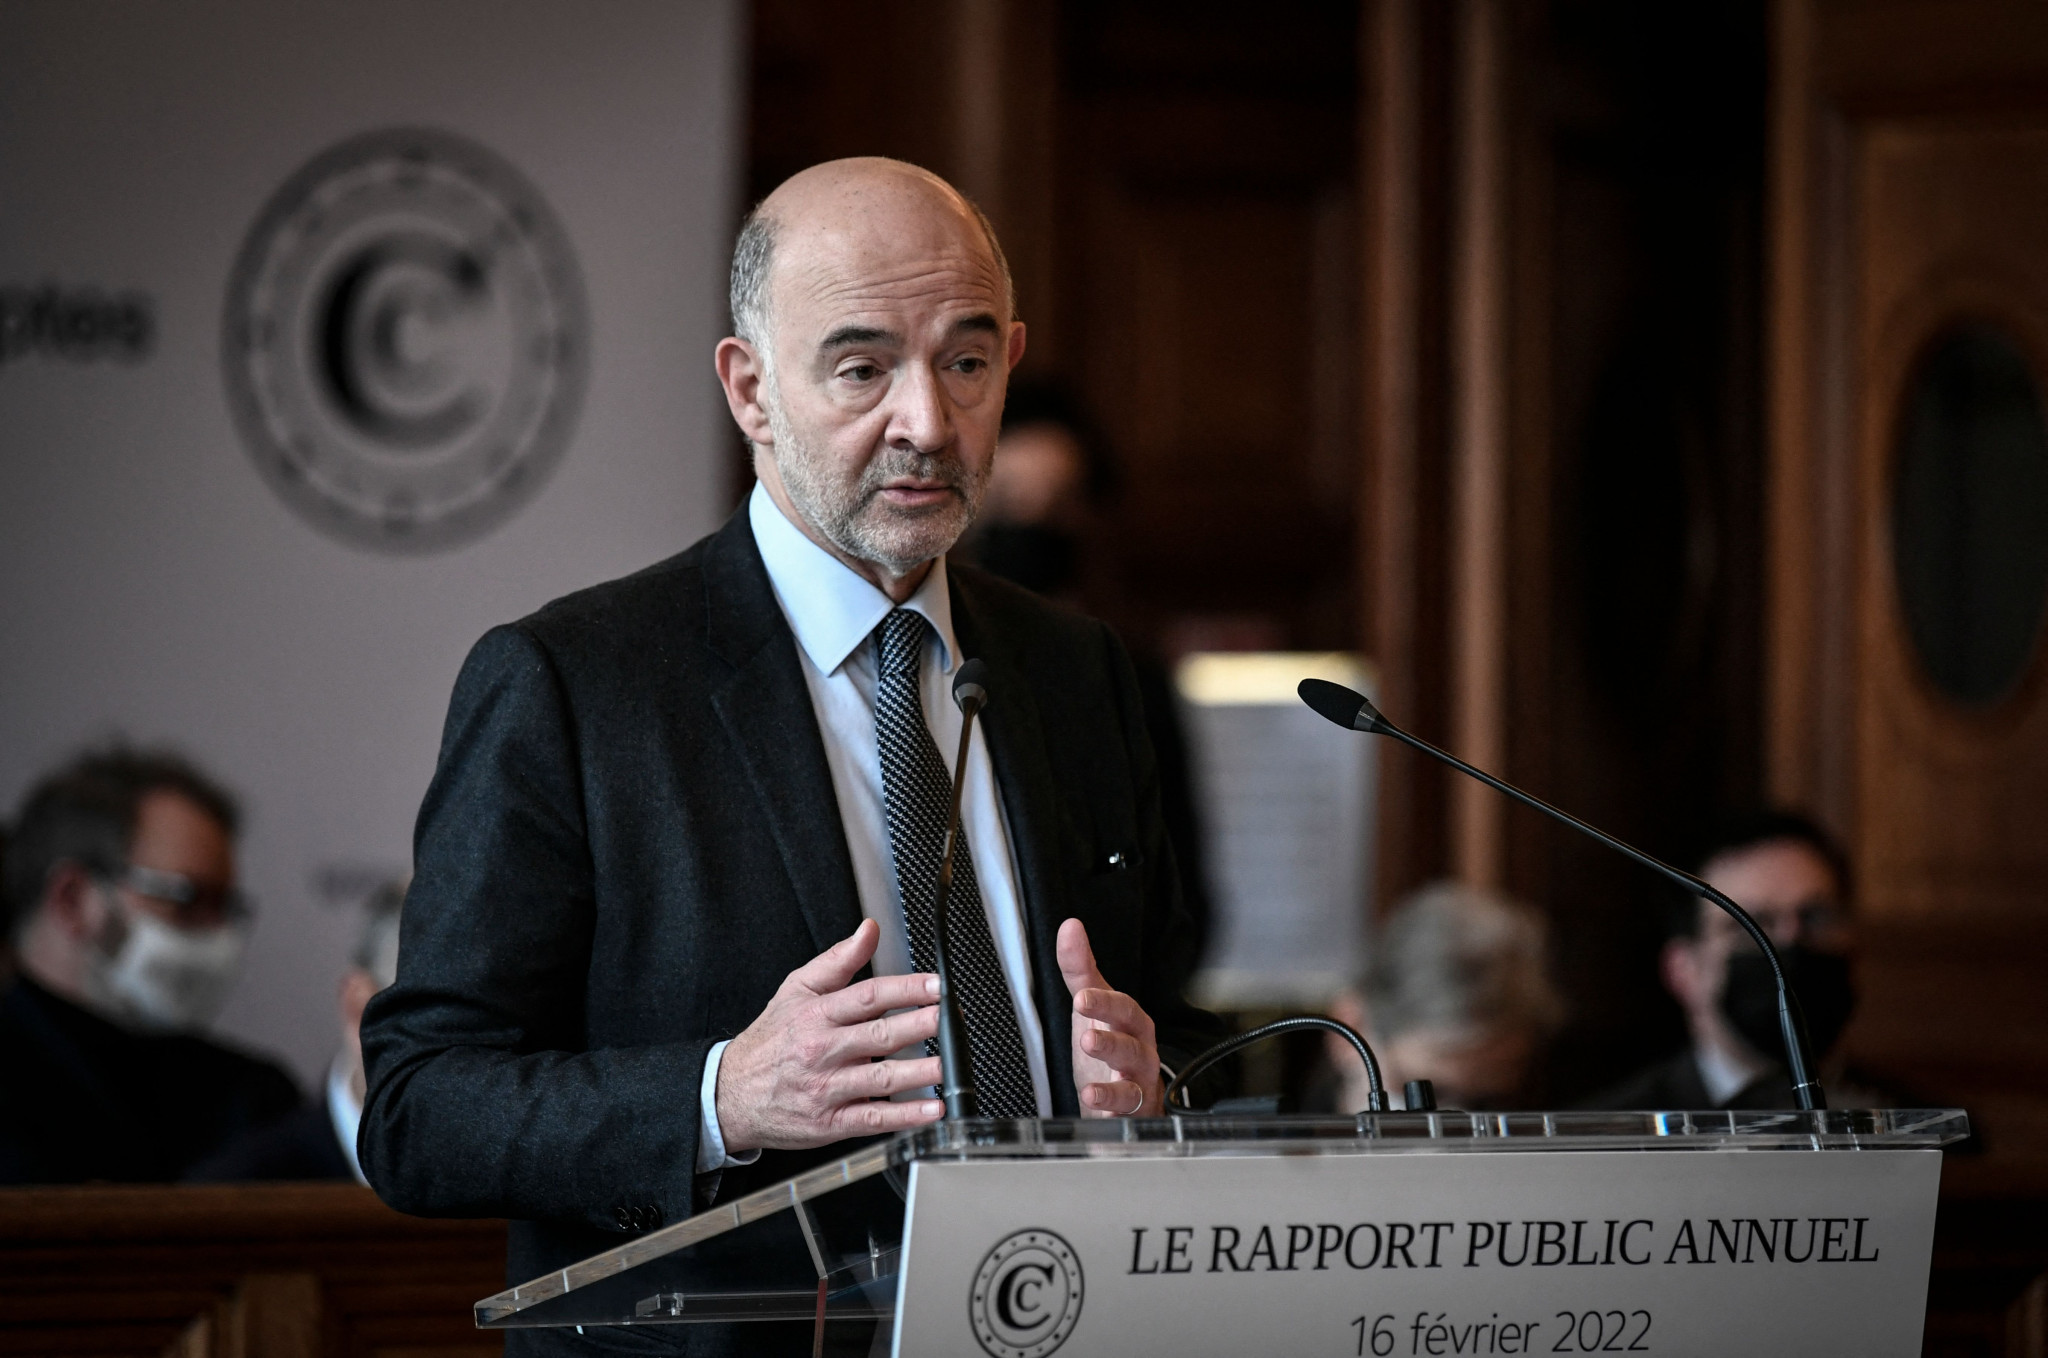 Public cost of Paris 2024 could reach around €3 billion